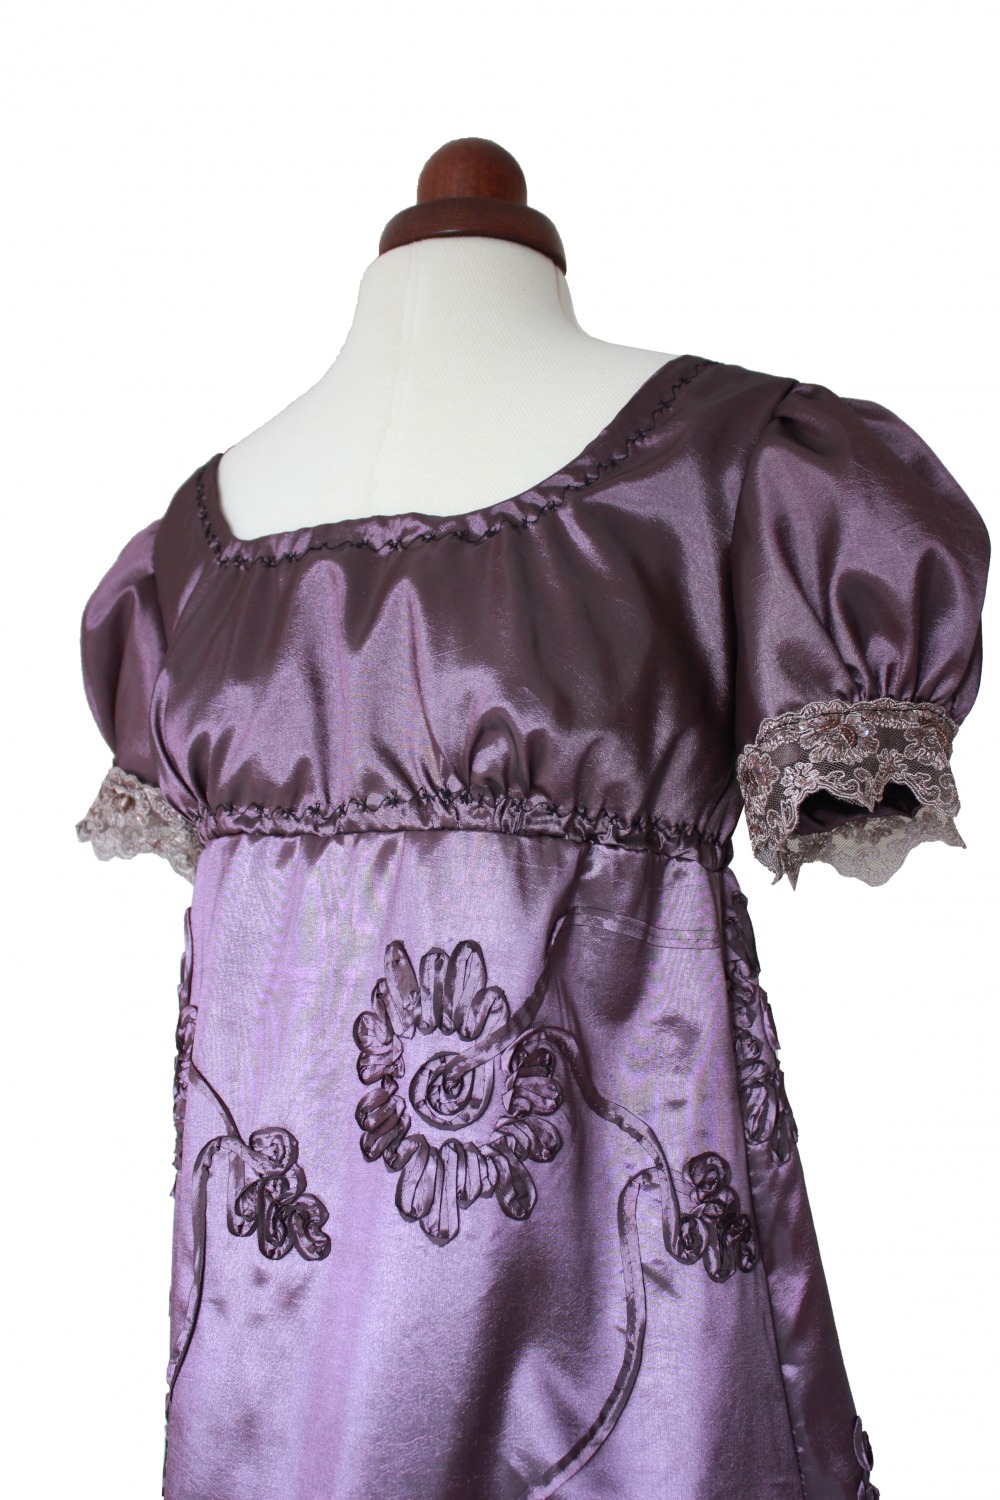 Ladies 18th 19th Regency Jane Austen Costume Evening Ball Gown Petite Size 12 - 14 Image